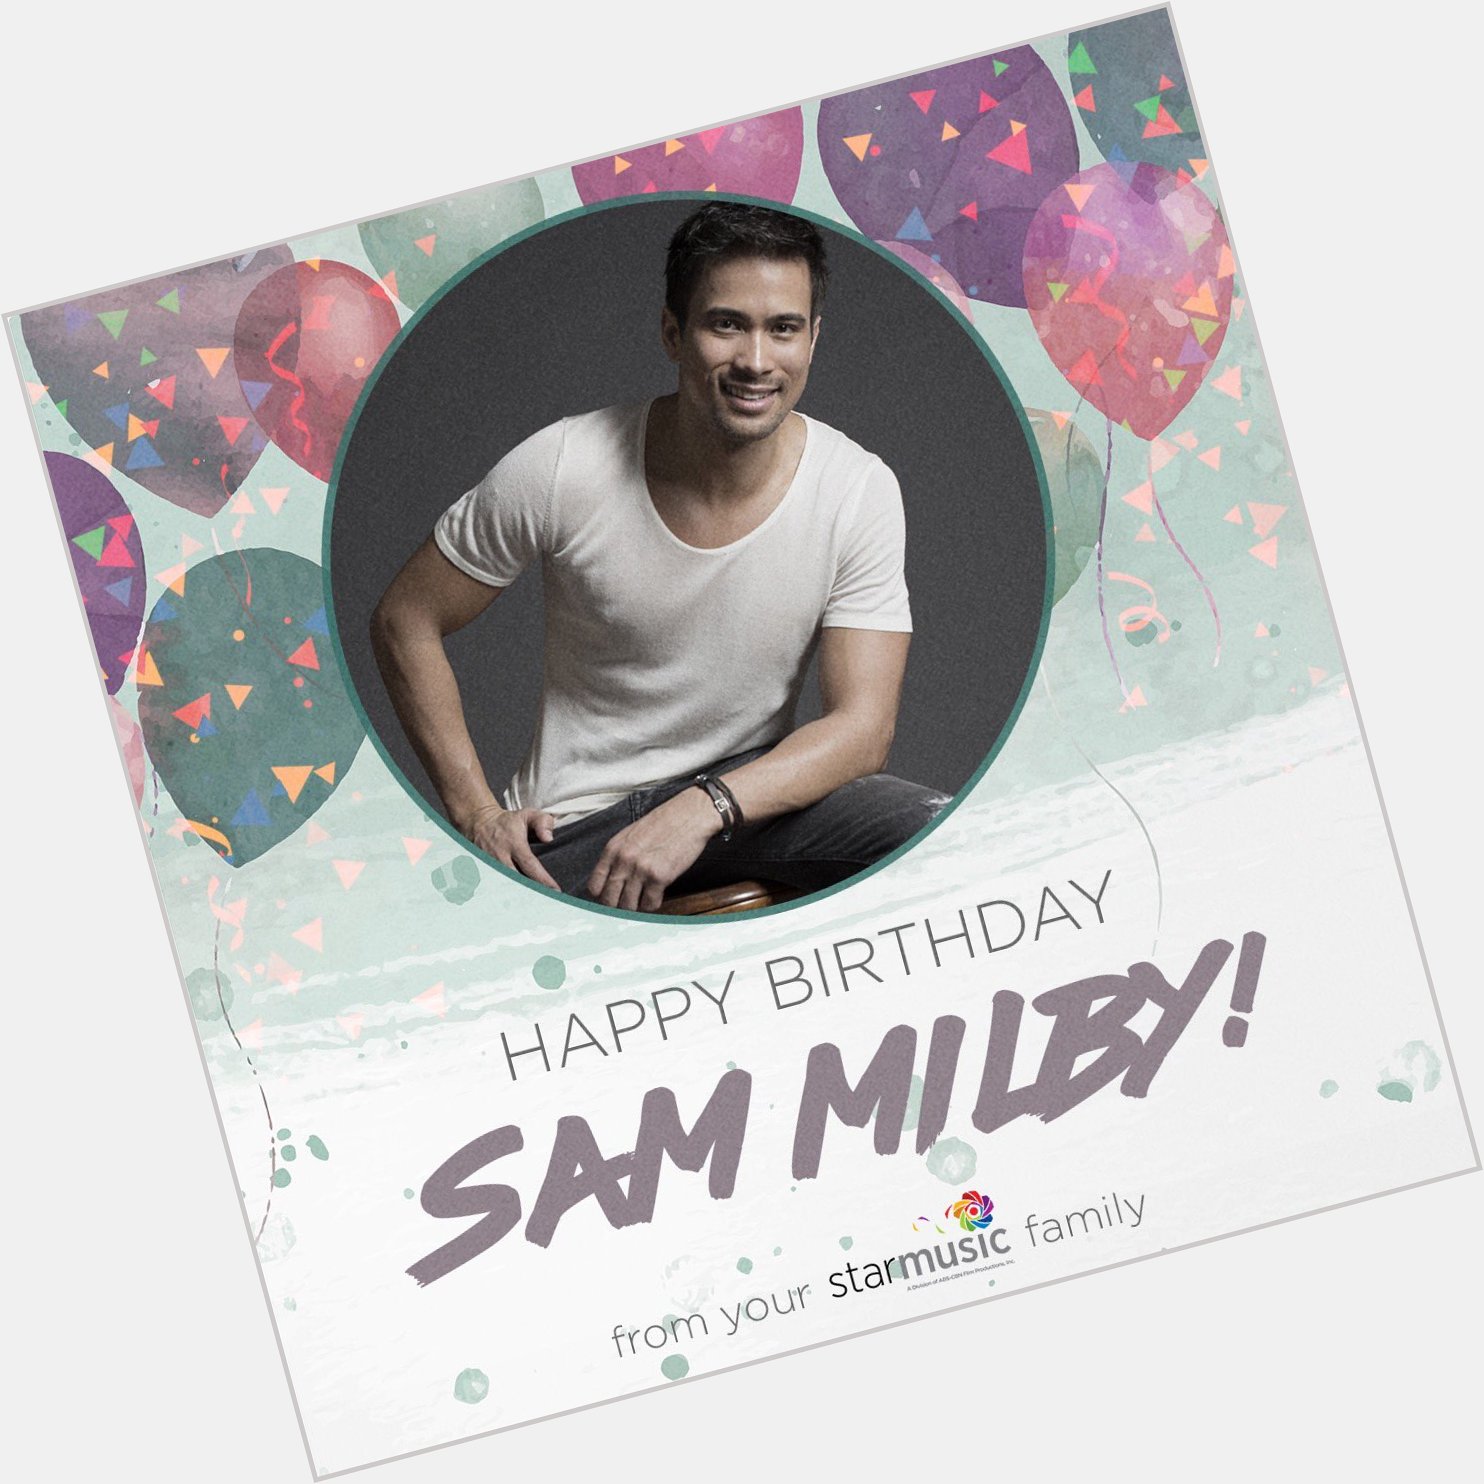 Happy birthday Sam Milby!! Love, your Star Music family!    